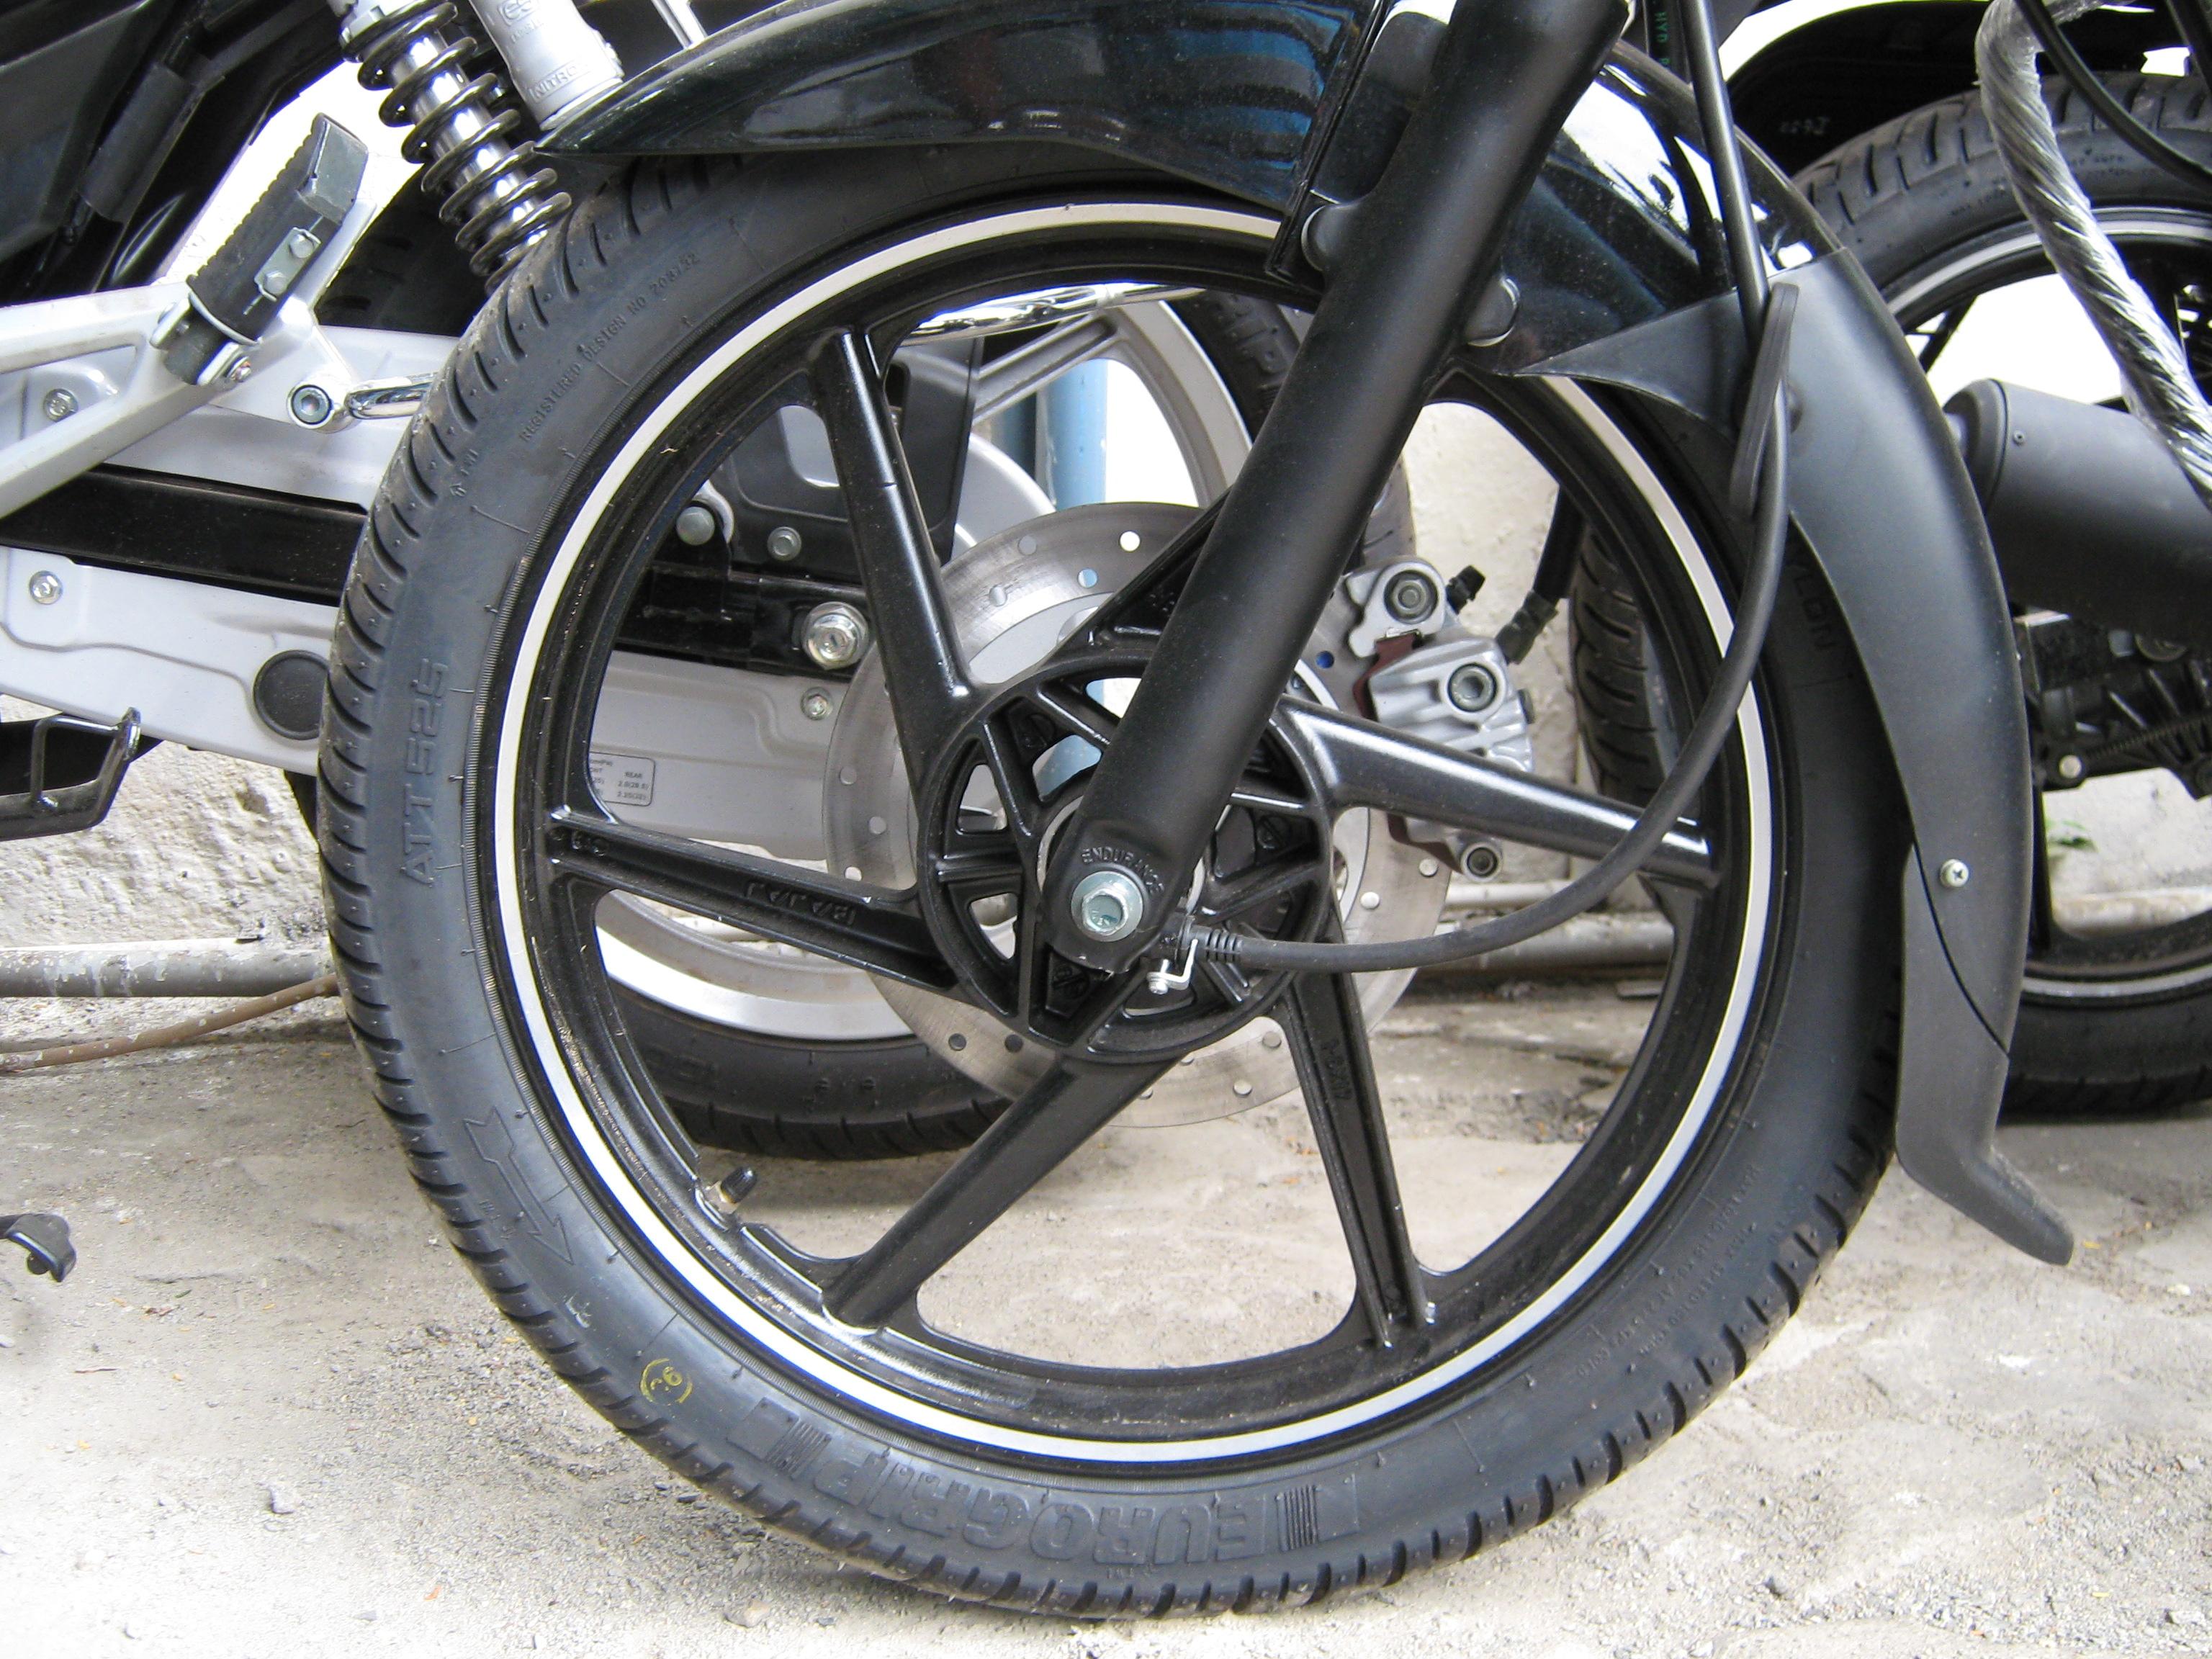 17 inch bike alloy wheels